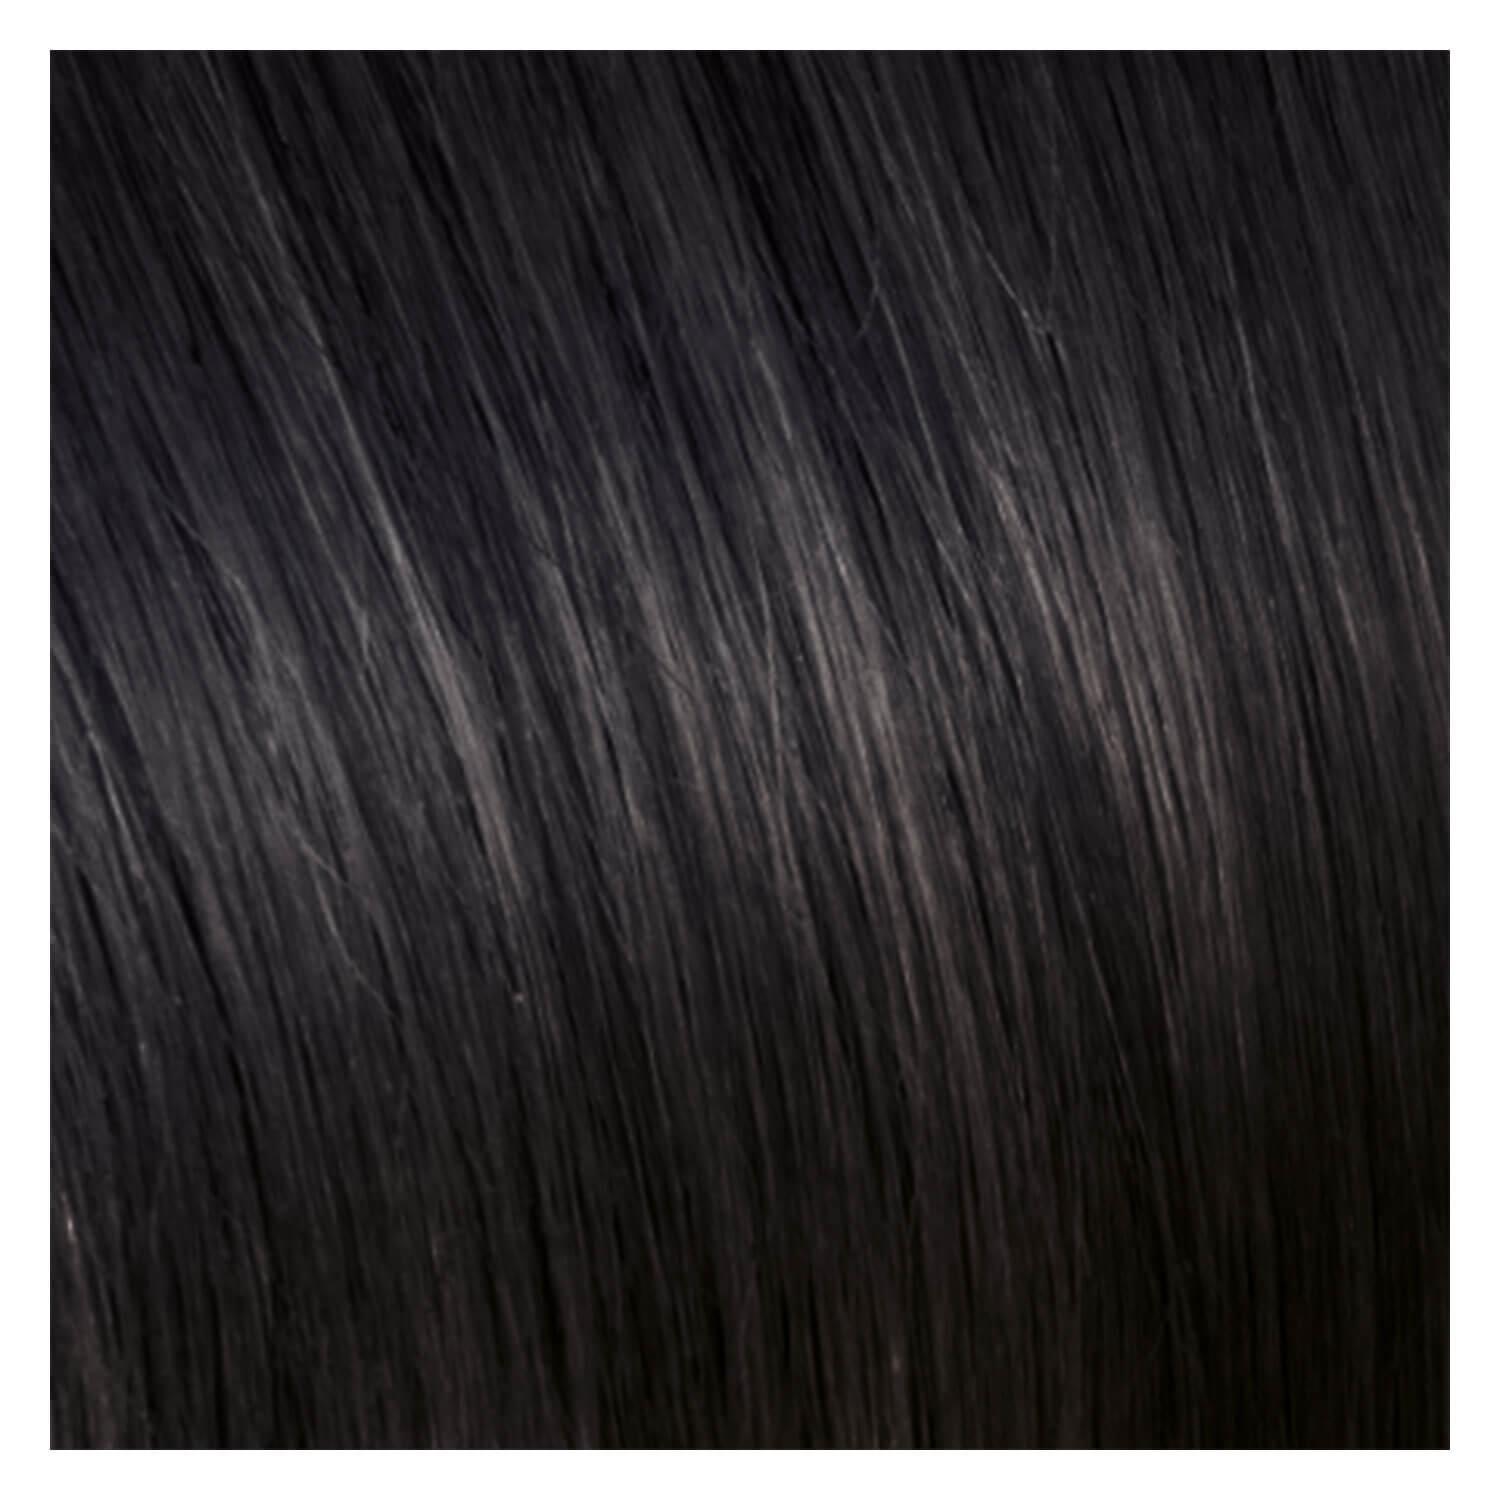 SHE Flip In-System Hair Extensions - 2 Marron Foncé 50/55cm